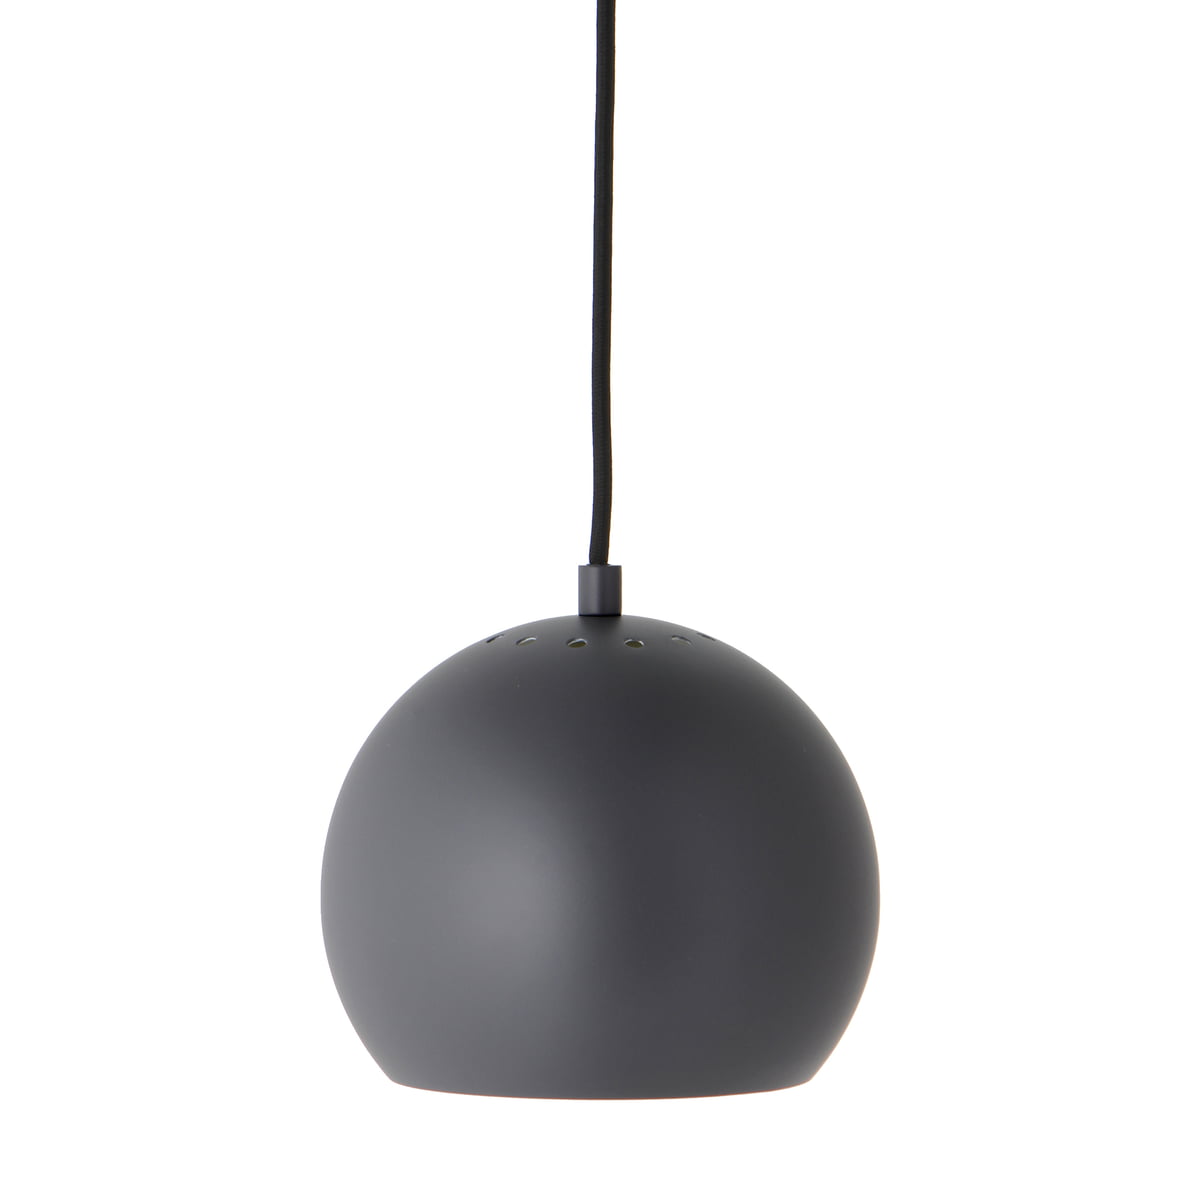 frandsen - ball lampe suspendue ø 18 cm, gris foncé mat / blanc